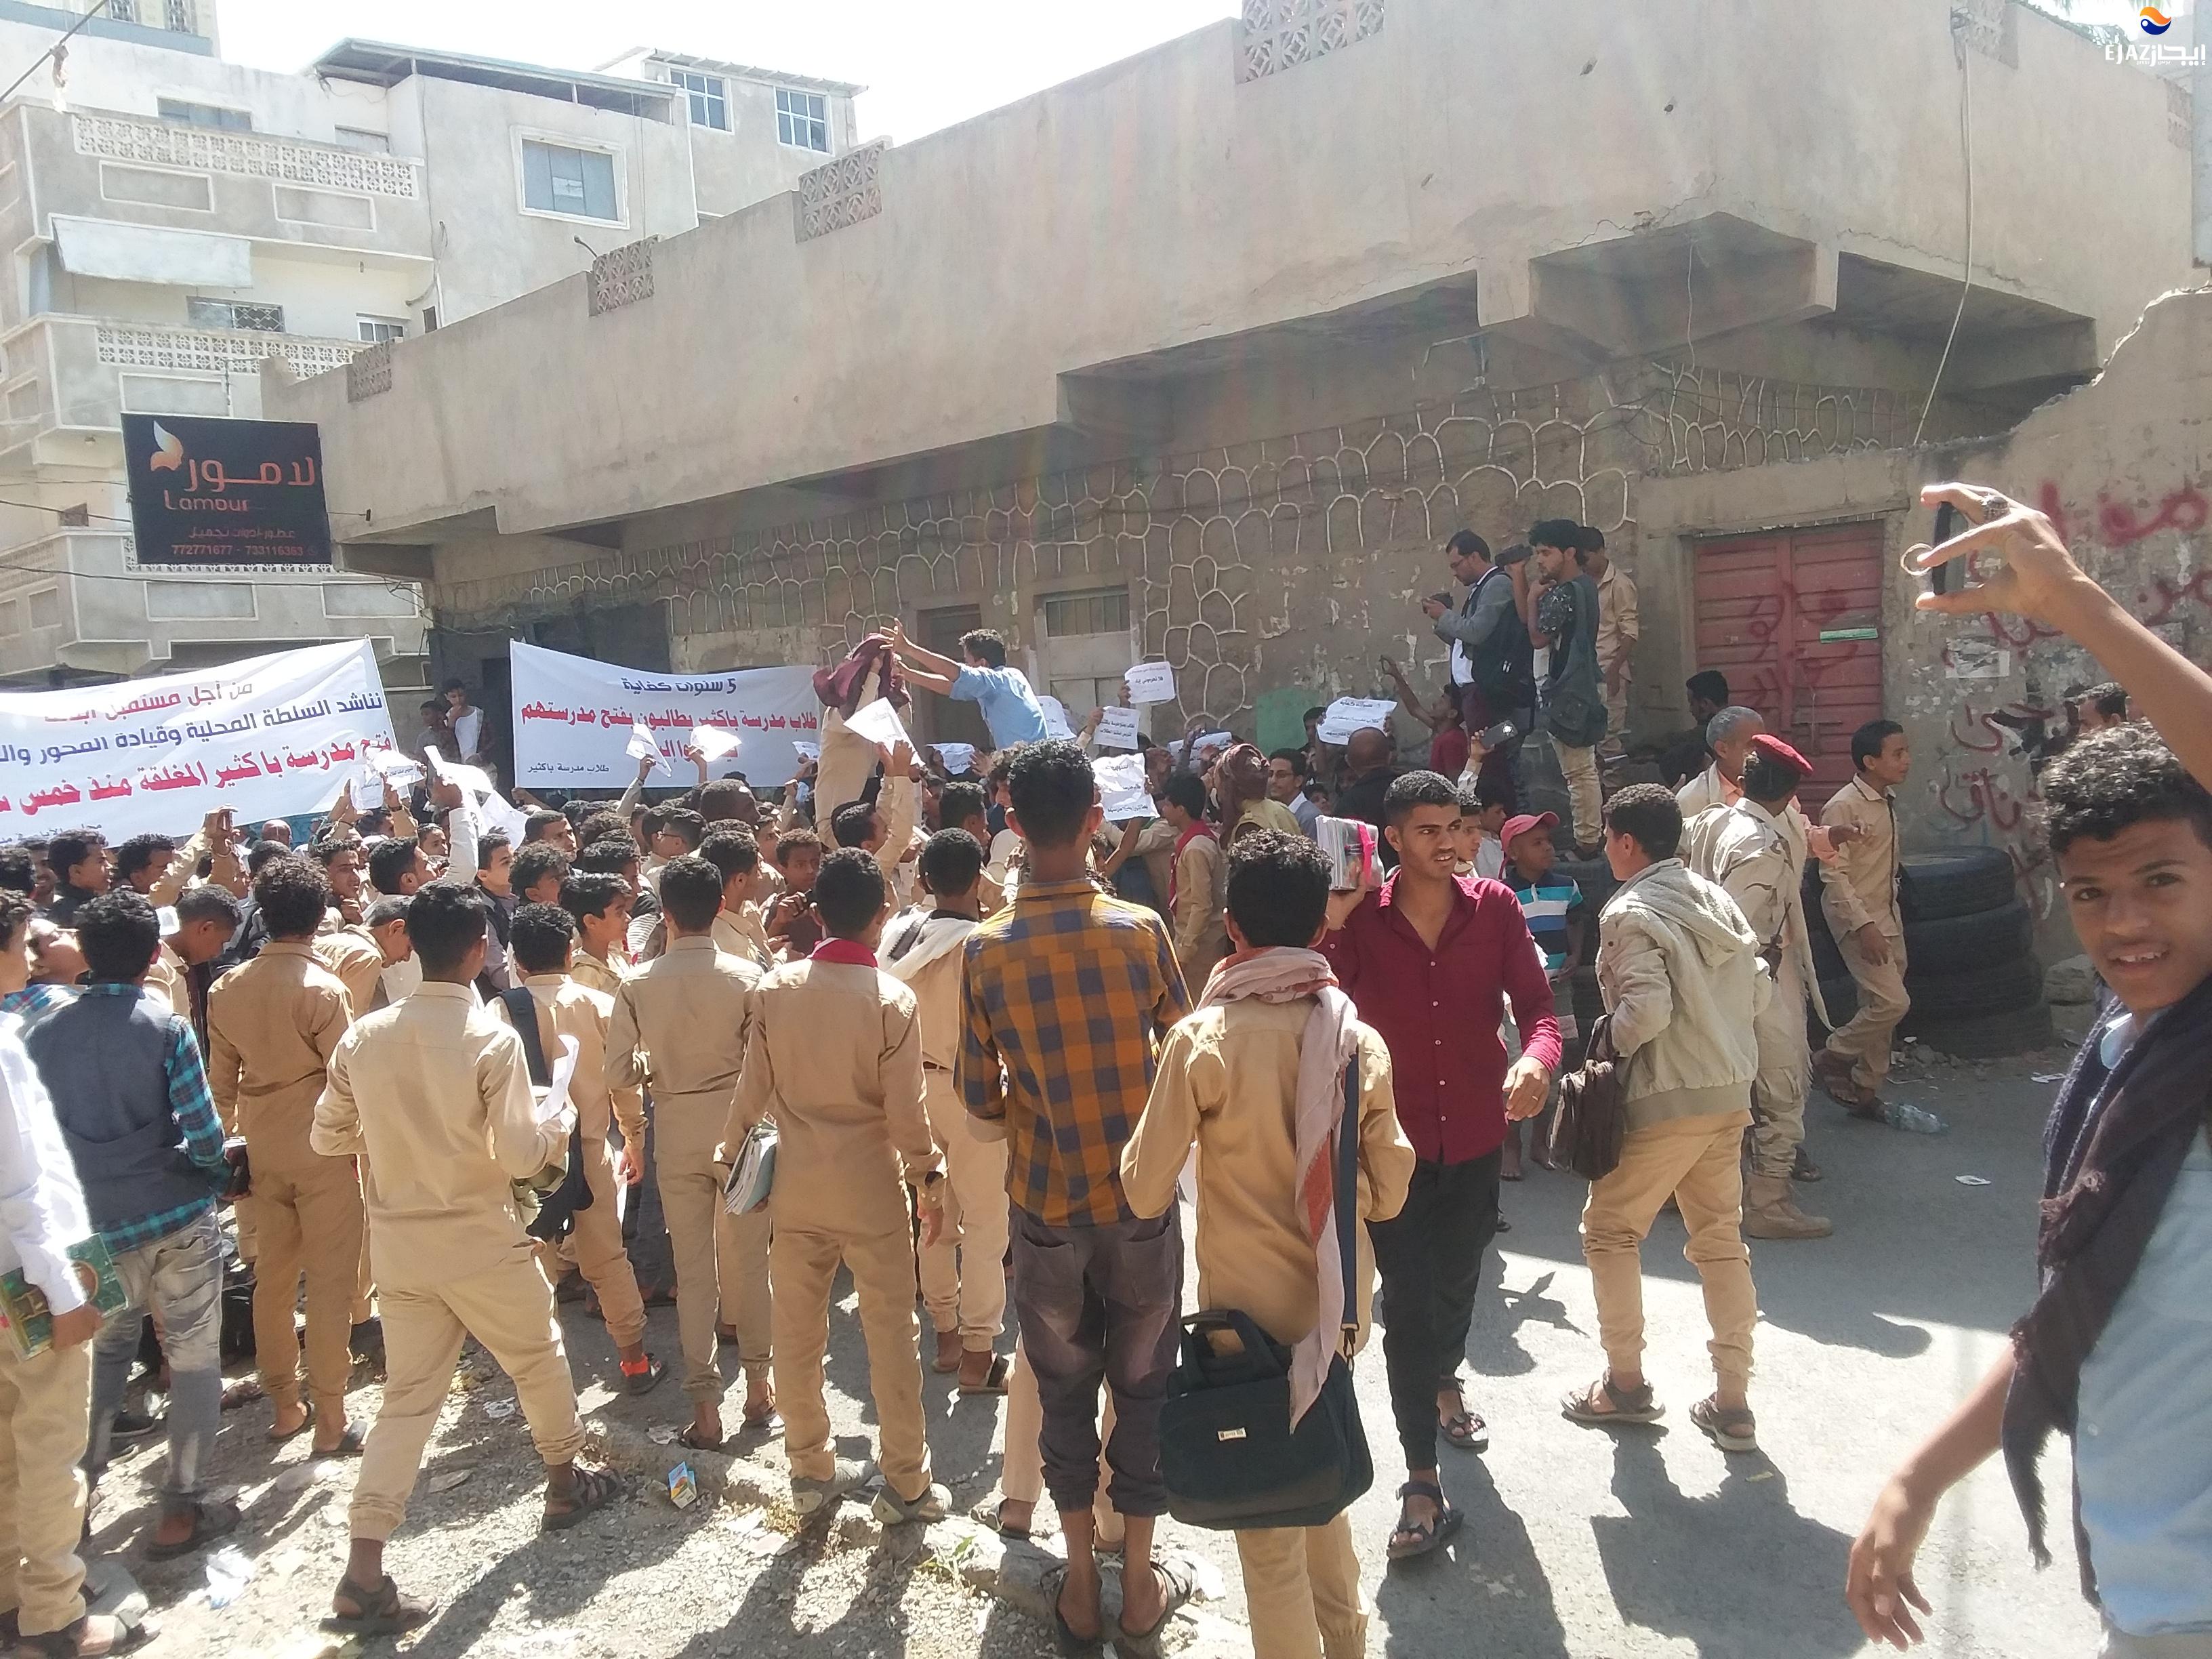 طلاب محتجون لاخلاء مدرستهم بتعز -تصوير عمران فرحان